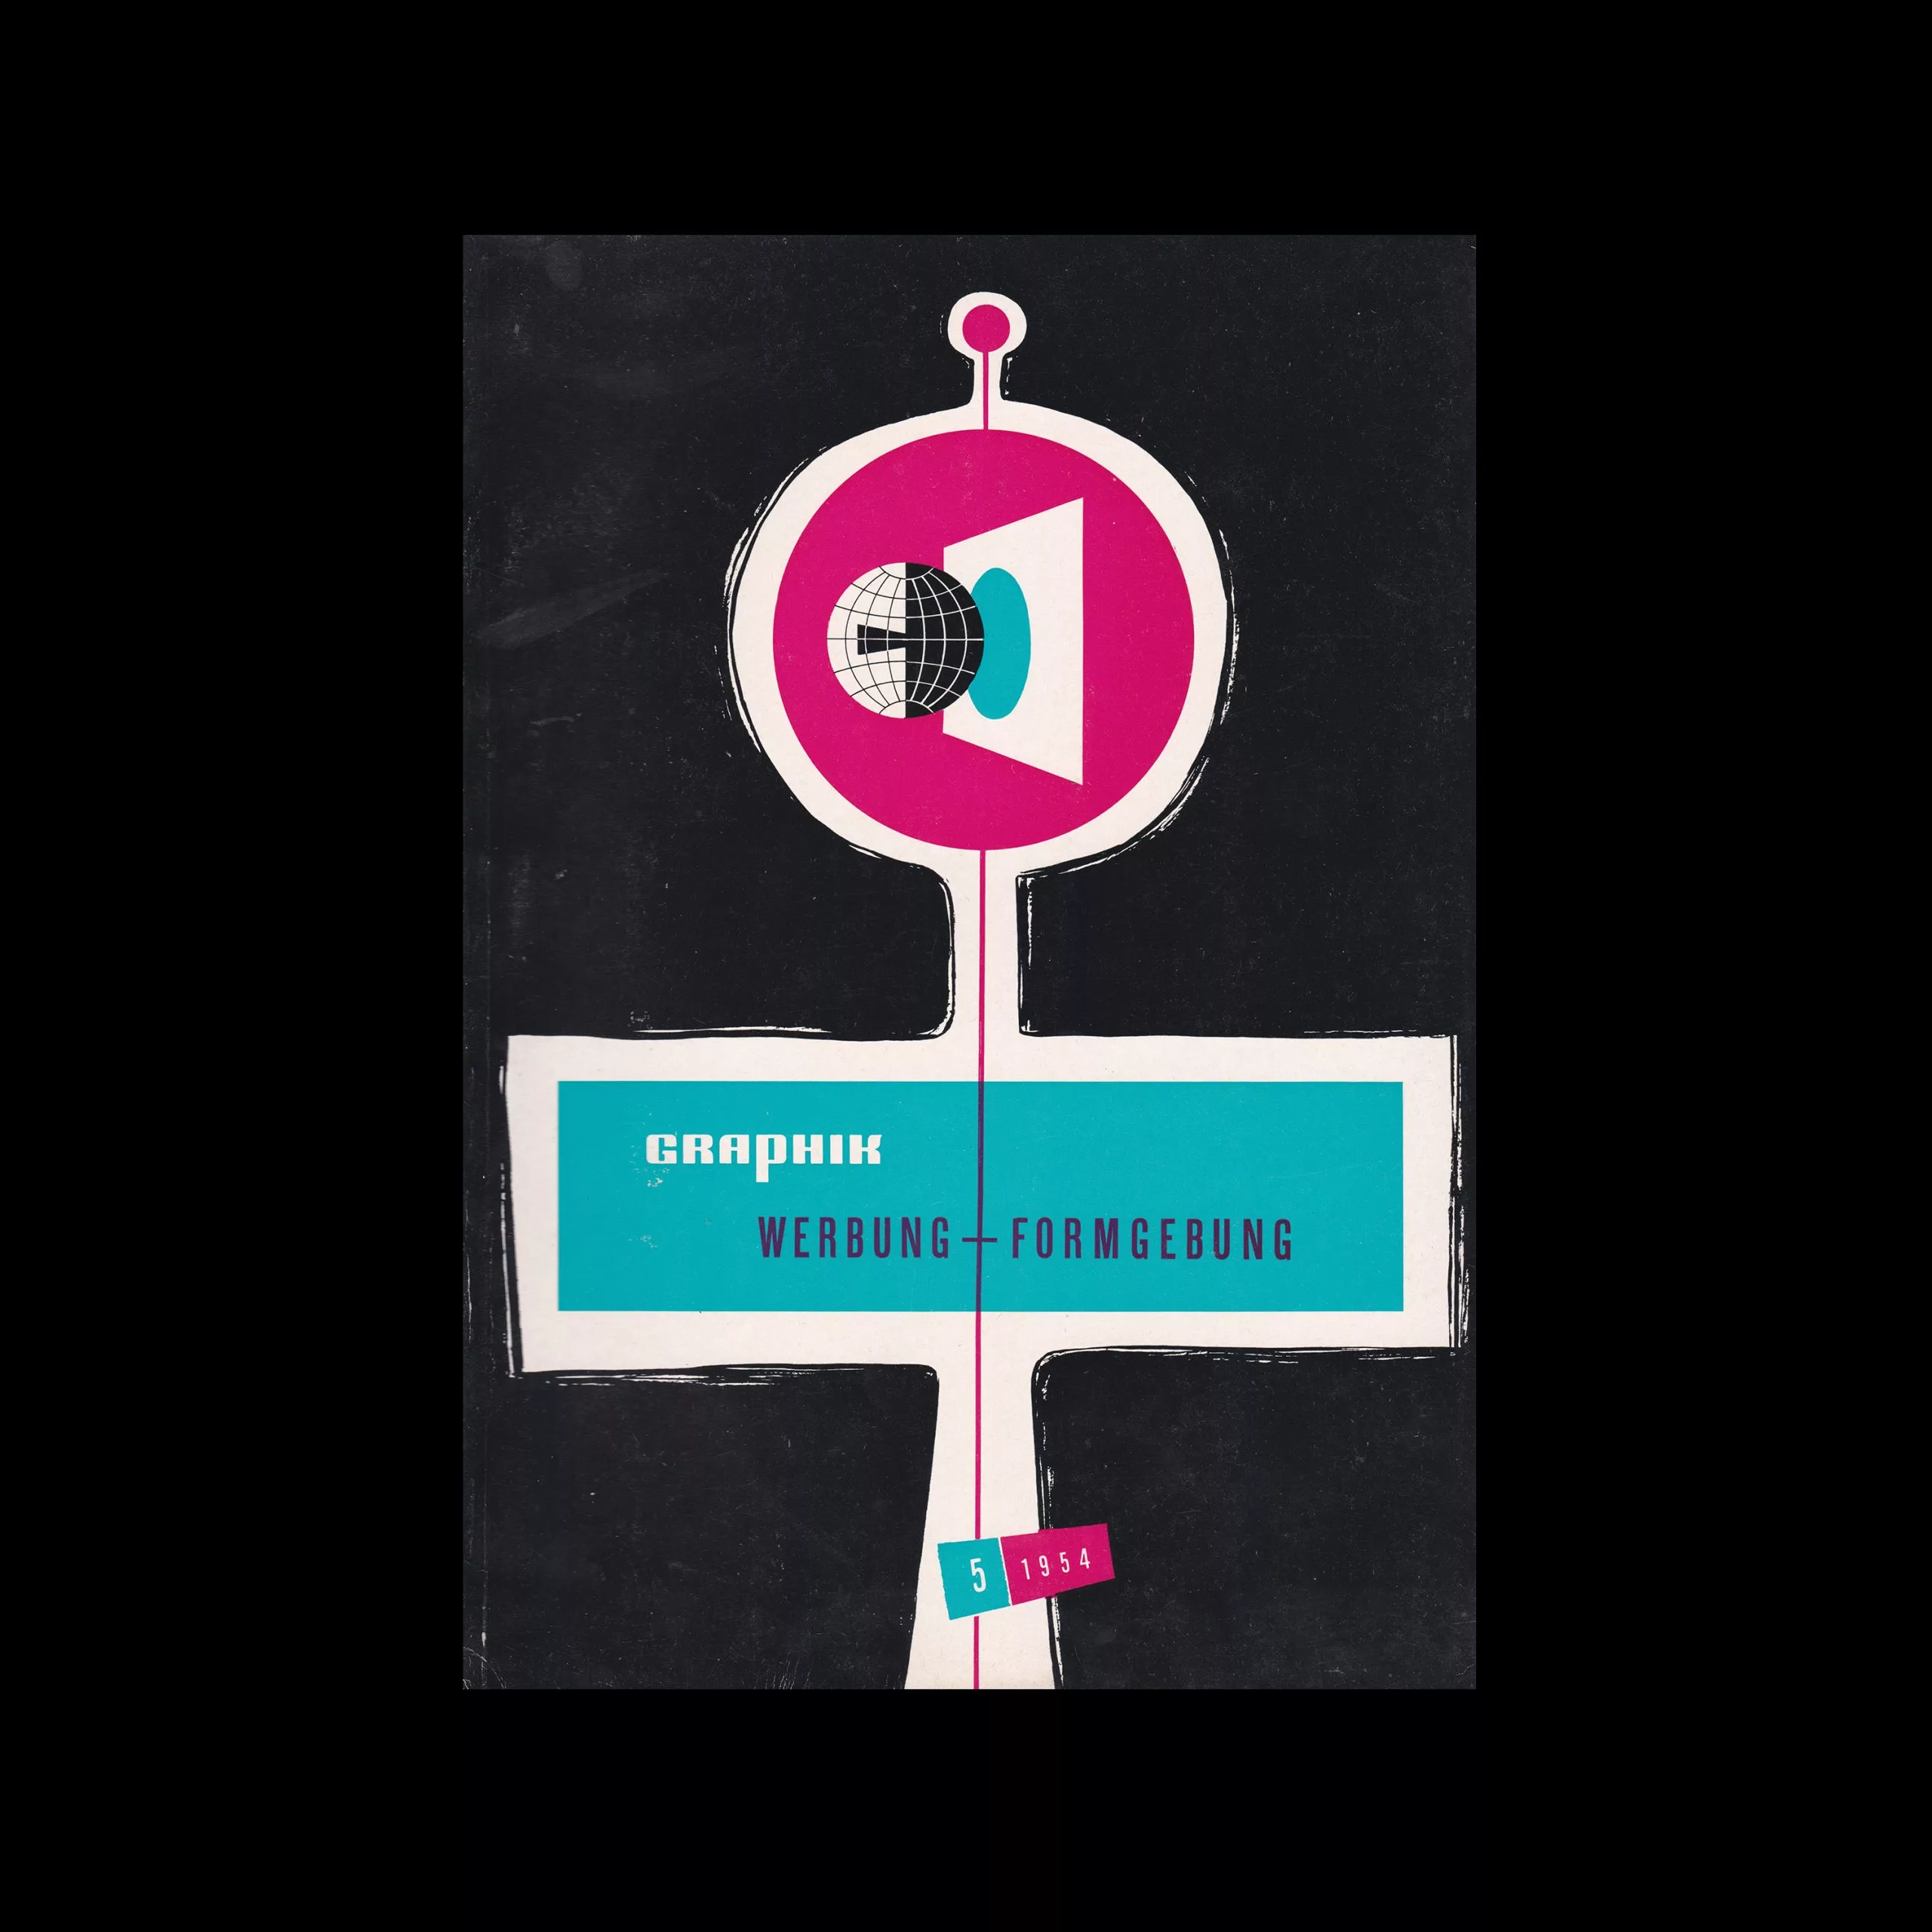 Graphik - Werbung + Formgebung, 2, 1954. Cover design by Hans Gaensslen